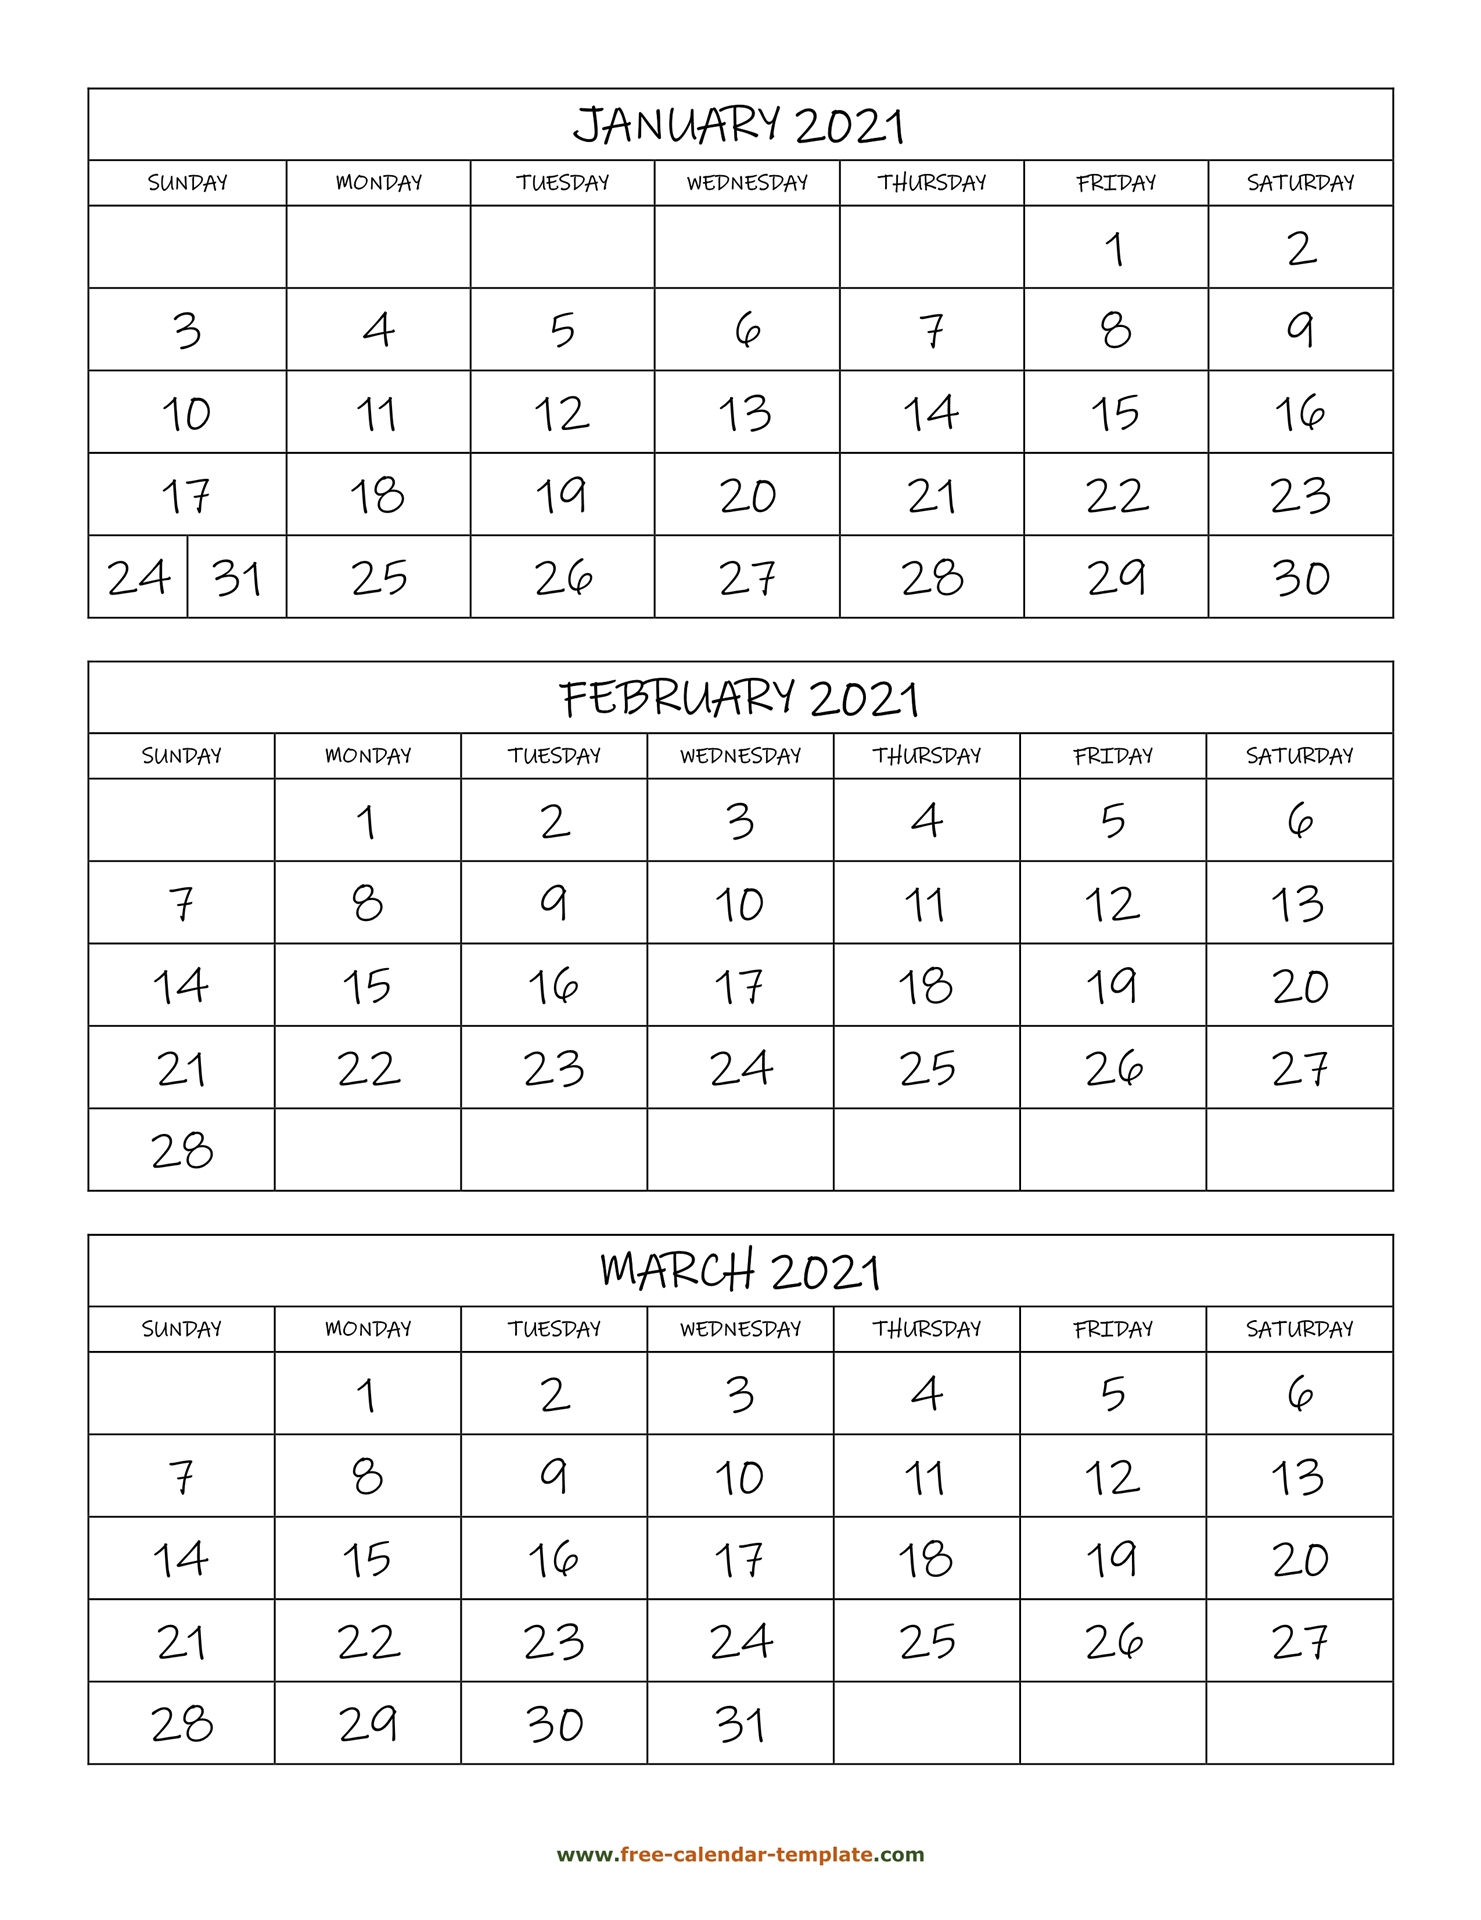 Free Monthly Calendar 21 3 Months Per Page Vertical Free Calendar Template Com